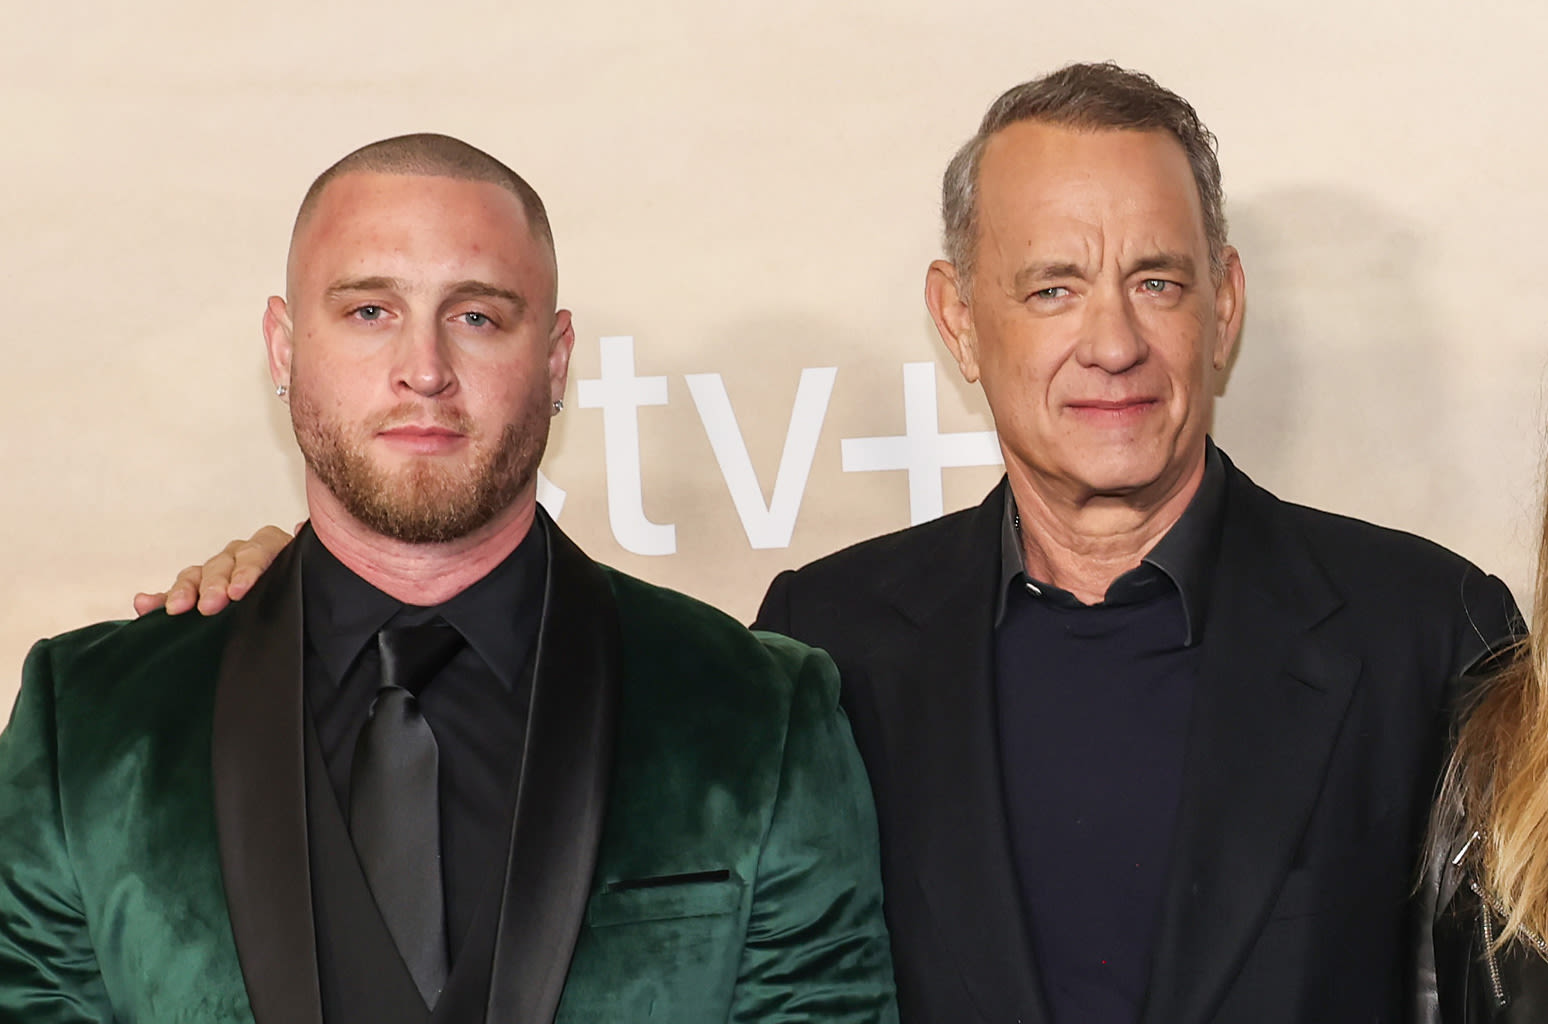 Tom Hanks Asks Son Chet to Explain the Drake vs. Kendrick Lamar Feud to Him: ‘Who’s Winning??’